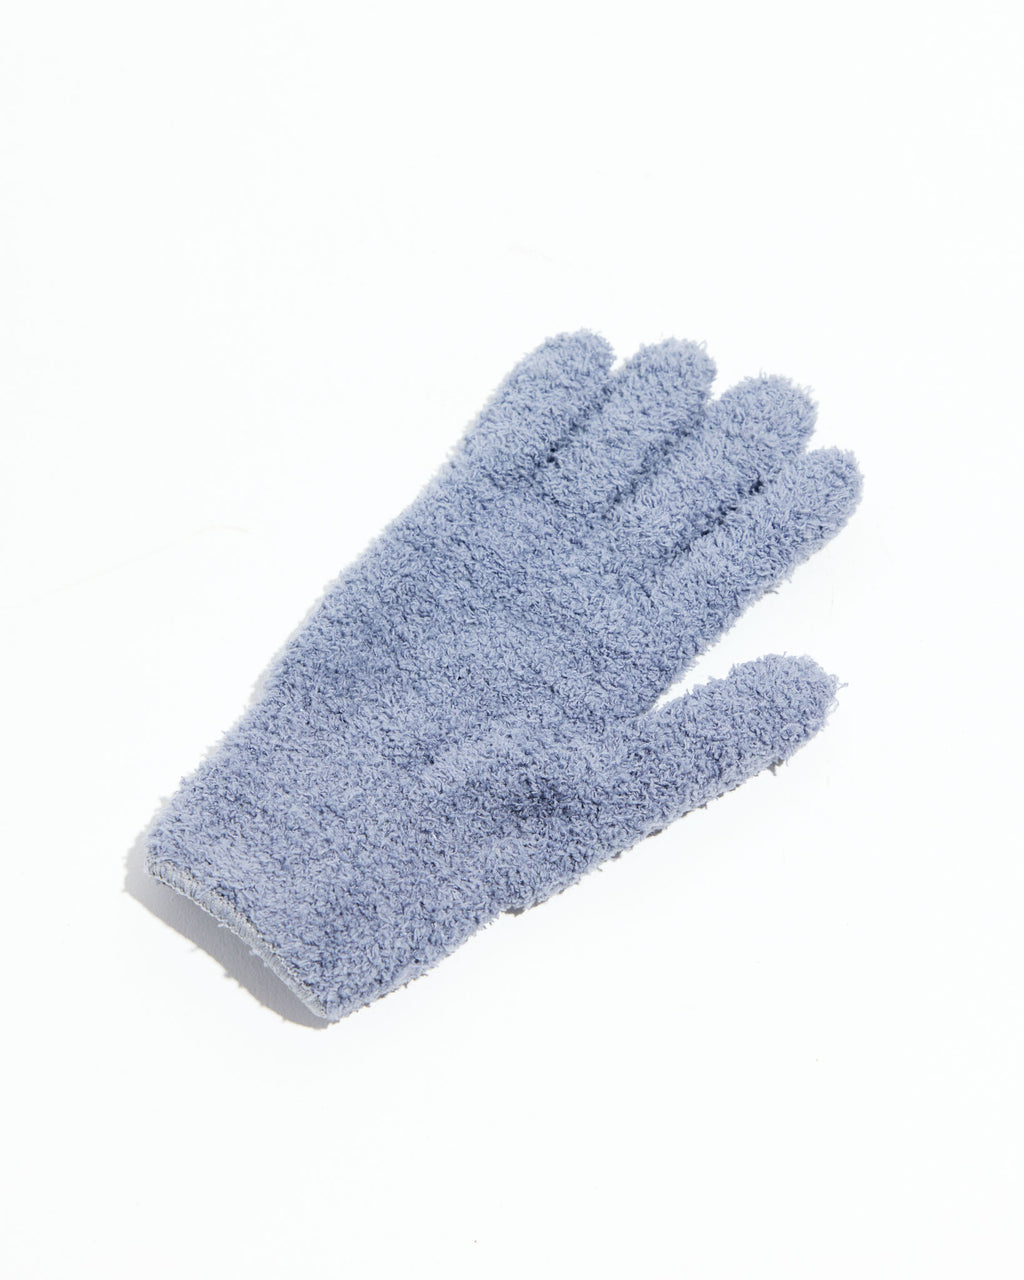 Dusting Glove, Cloth Glove